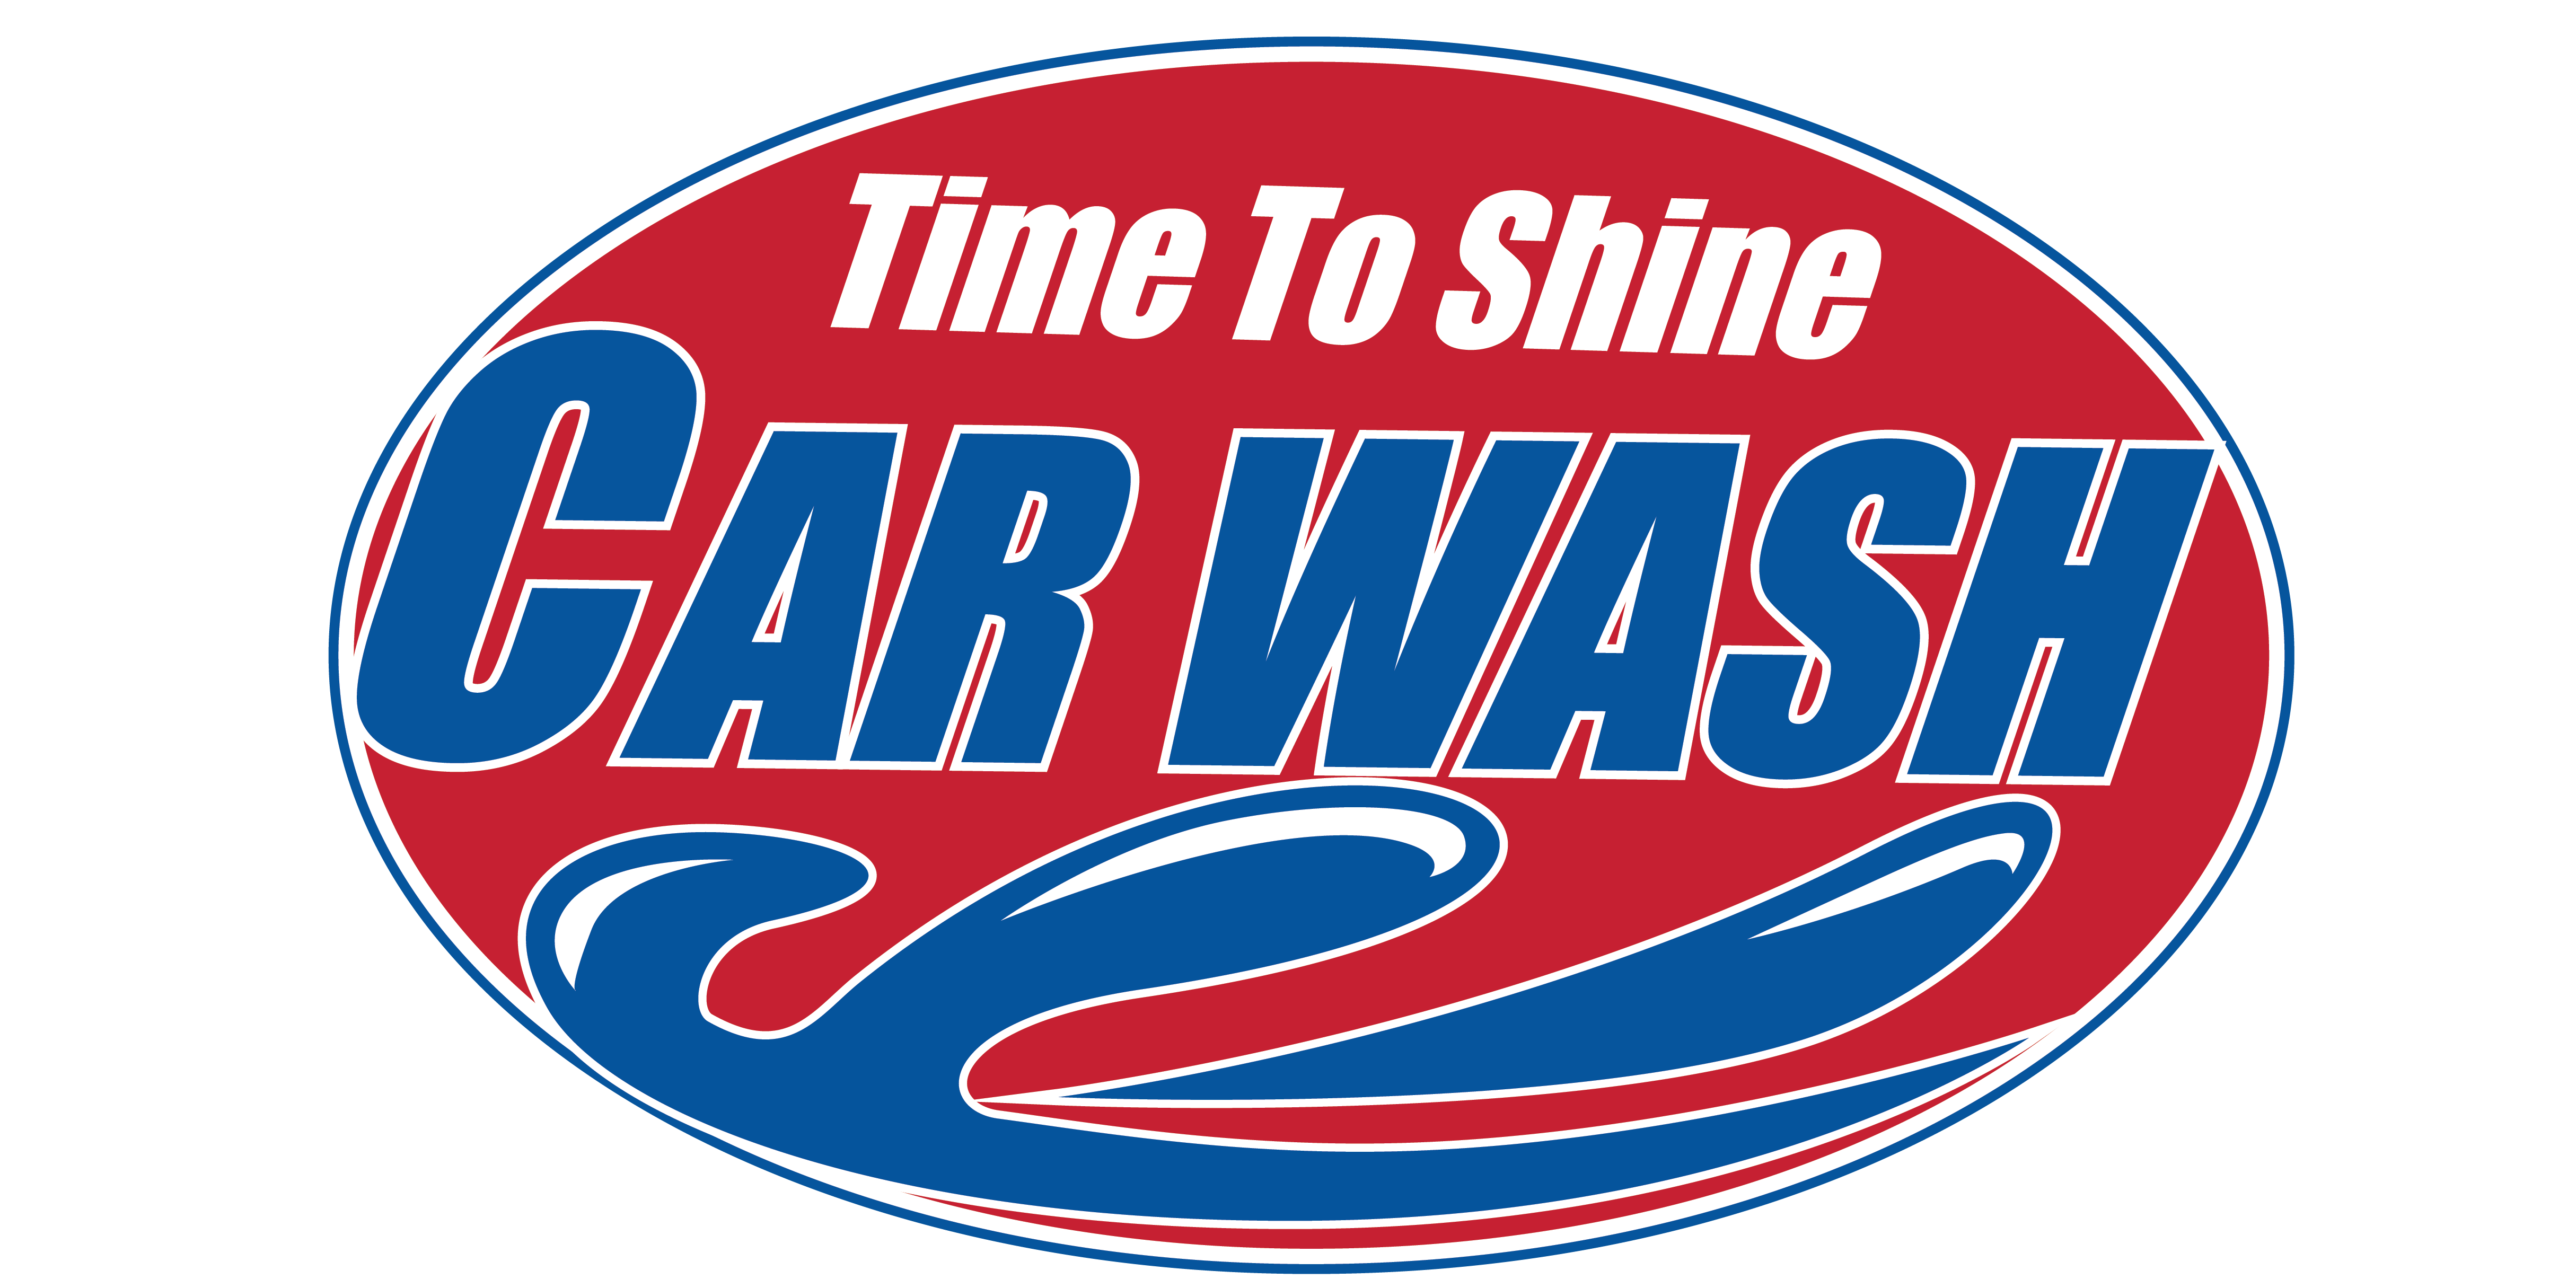 Time To Shine Car Wash